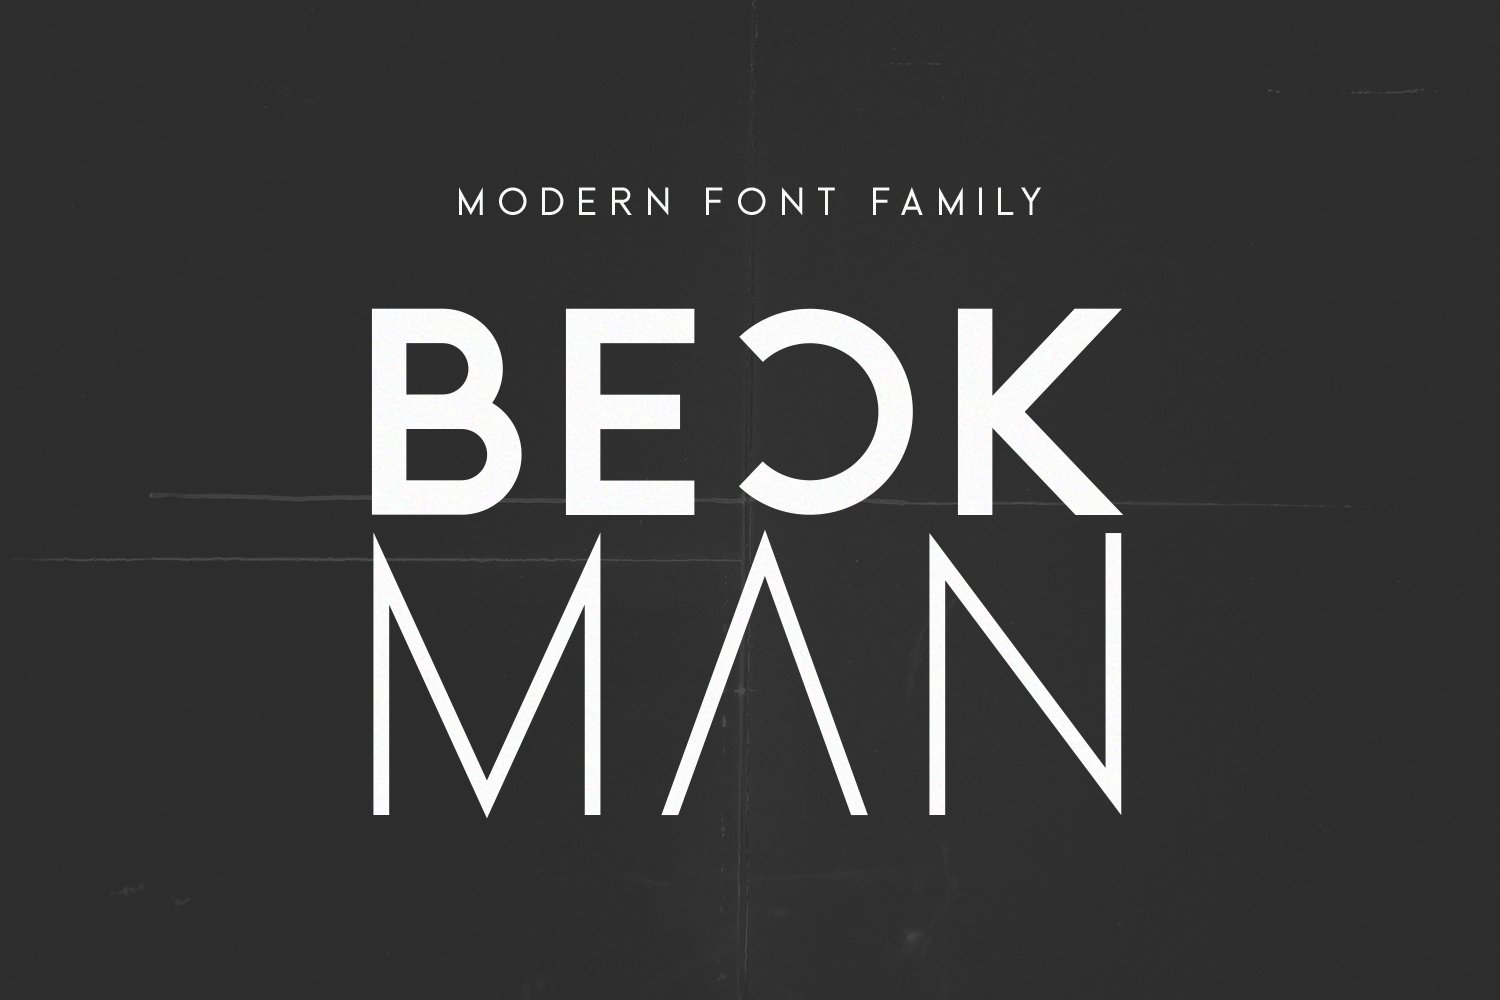 Beckman Modern Font cover image.